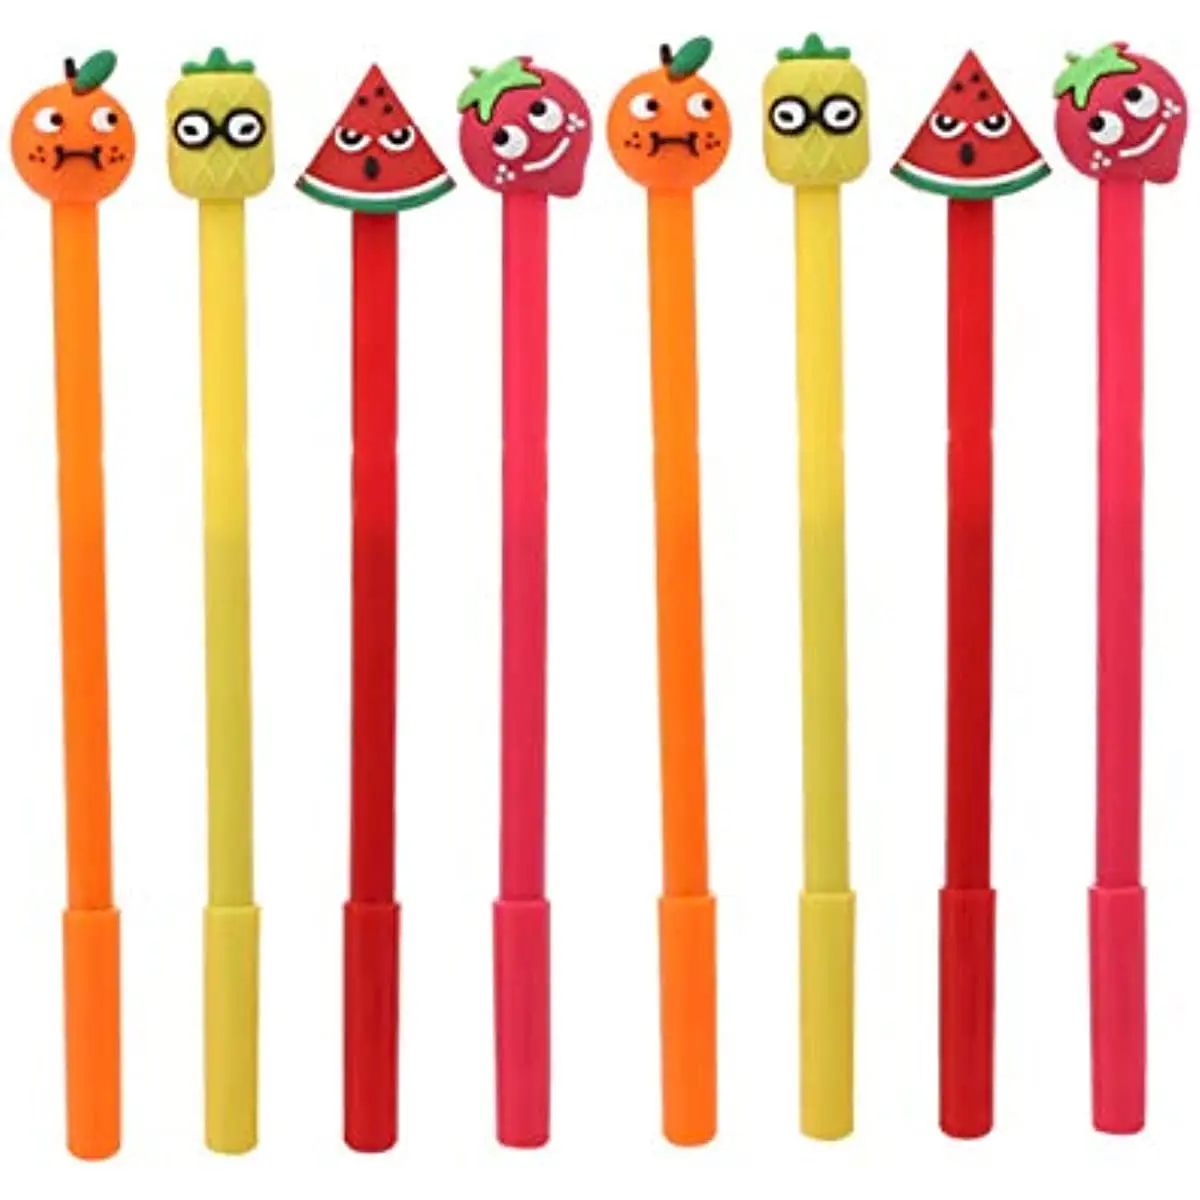 60 Pcs Cute Gel Pens Colorful Kawaii Lovely Cartoon Novelty Creative Lollipop Fruits Watermelon Pineapple Orange Strawberry